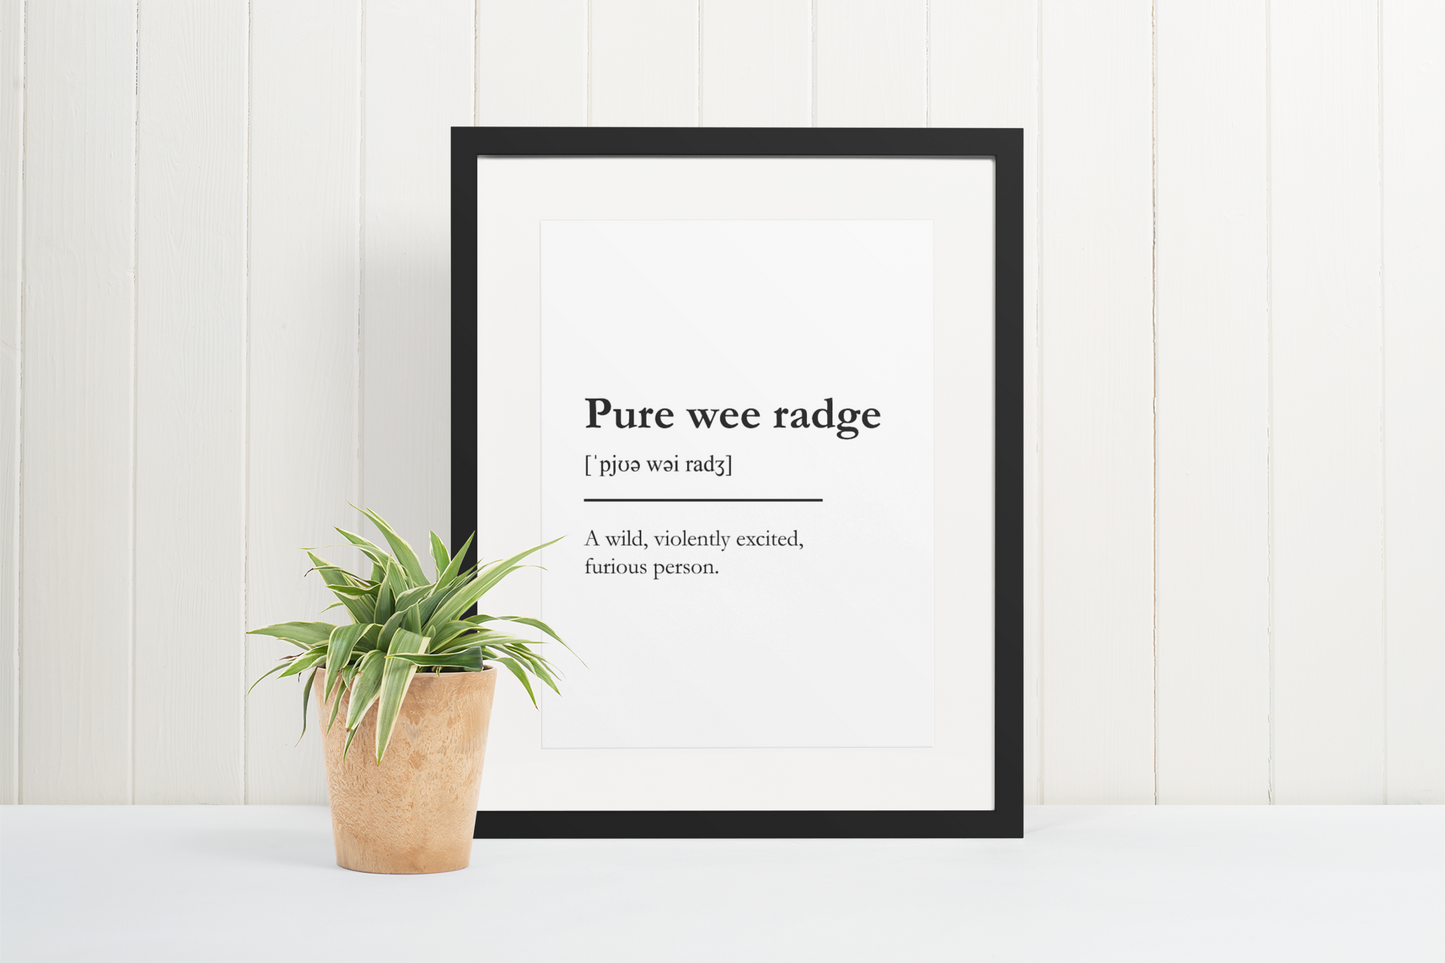 "Pure wee radge" - Scottish Slang